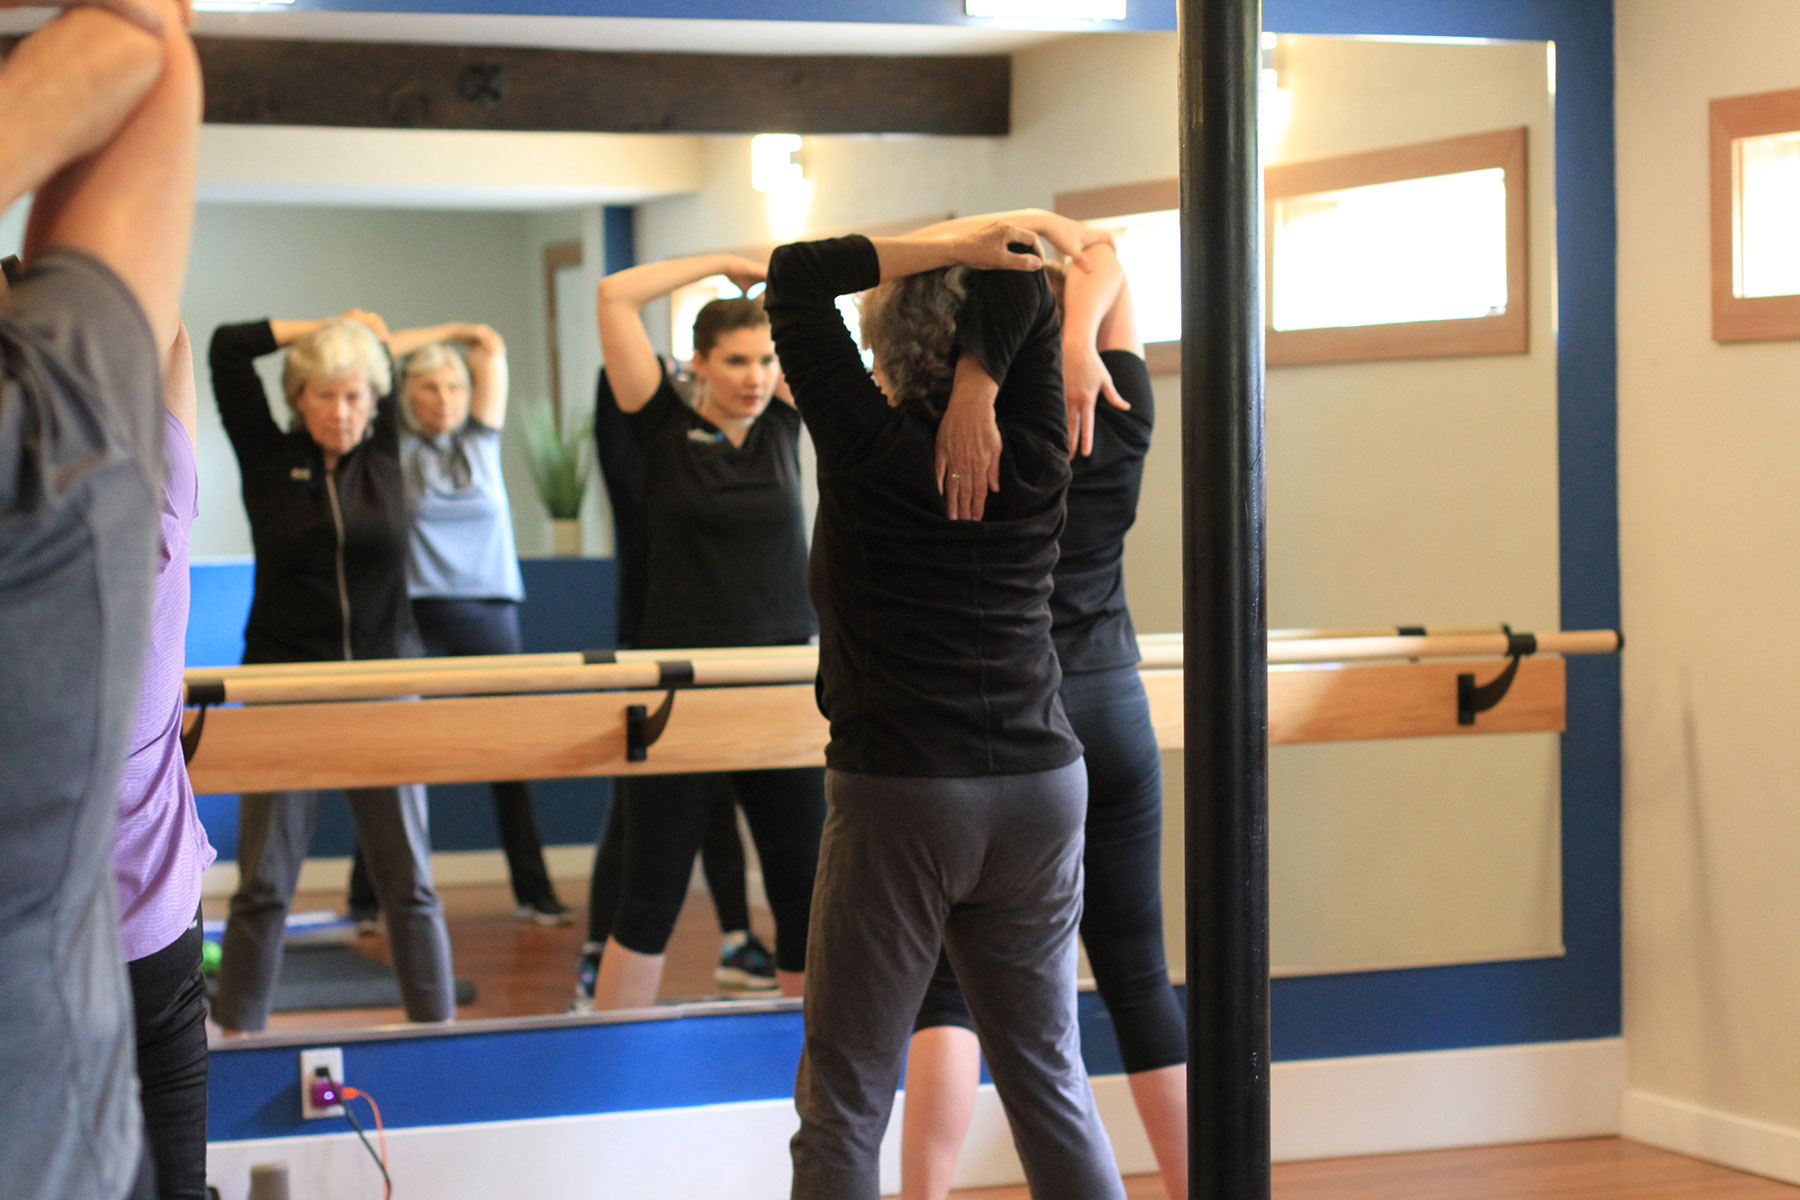 Fit Club For Women - Full Body Stretch Class